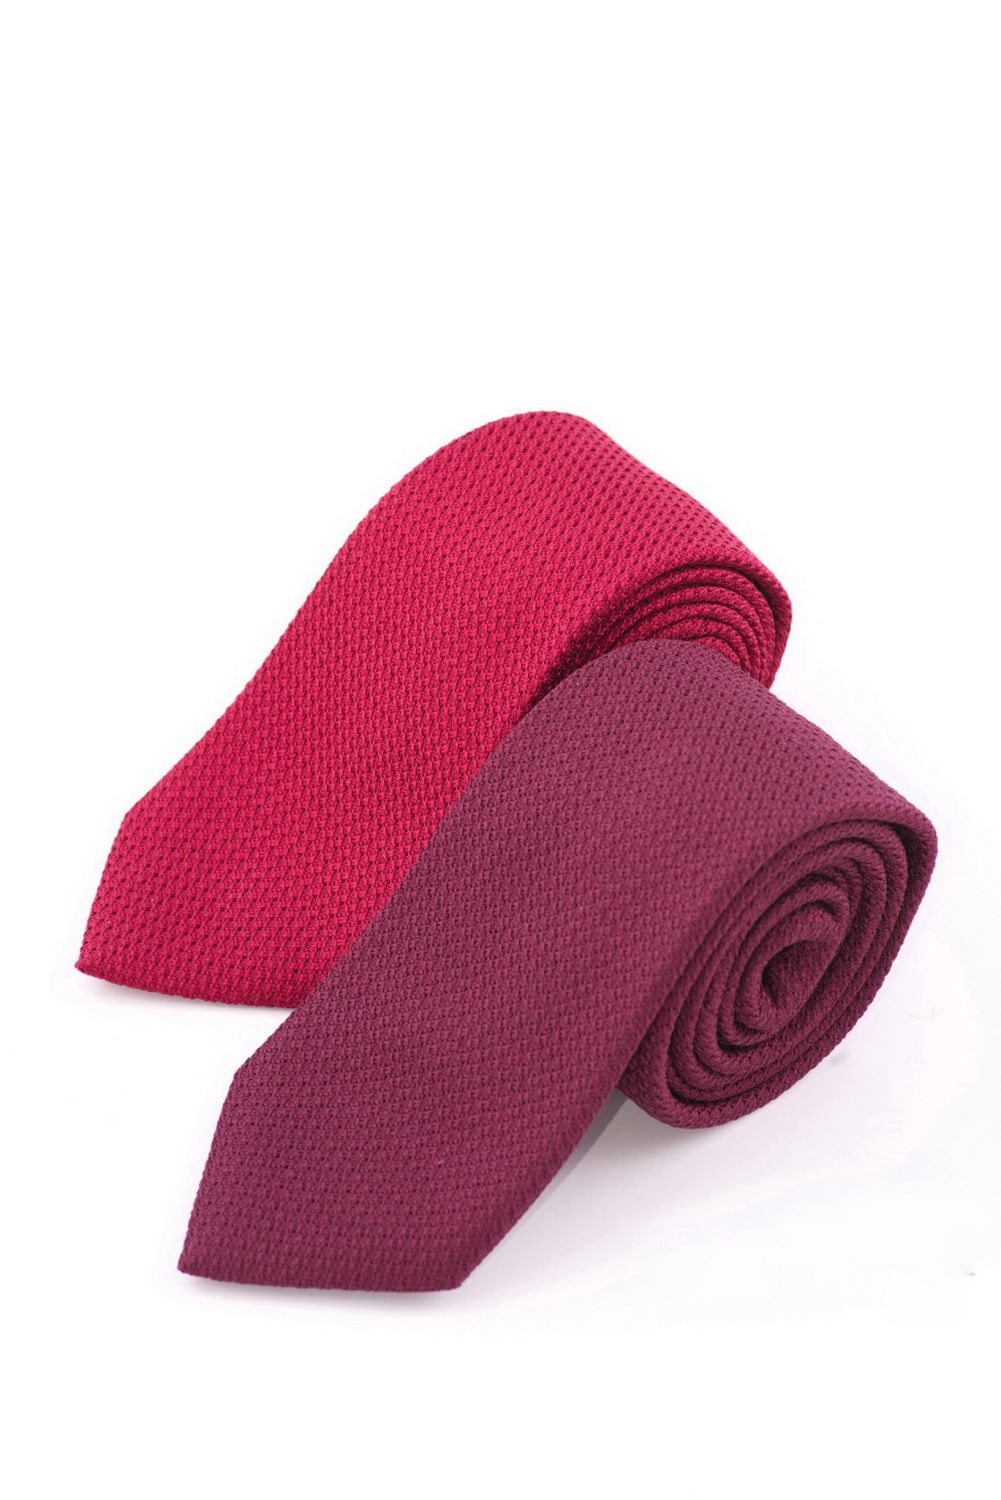 Knit Tie in Solid Burgundy Red Silk - Fort Belvedere